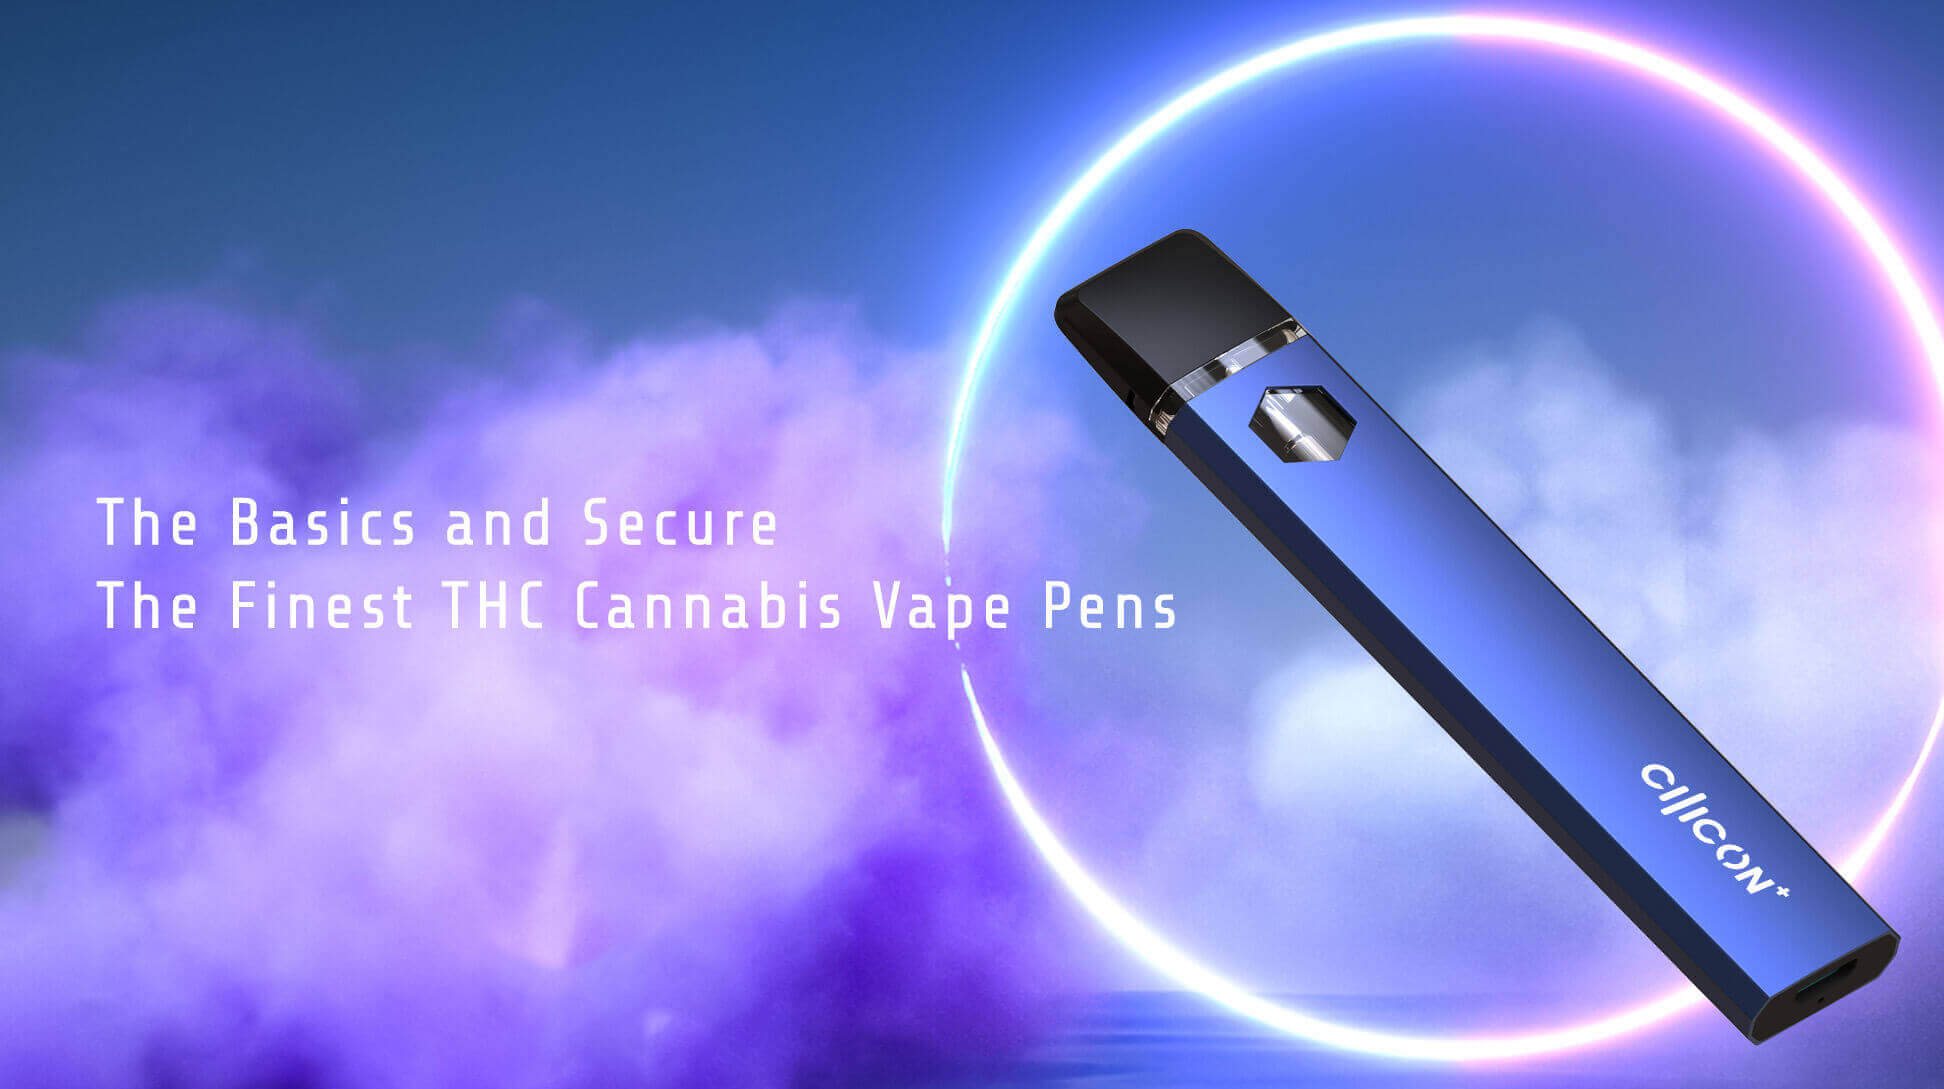 thc cannabis vape pens.jpg